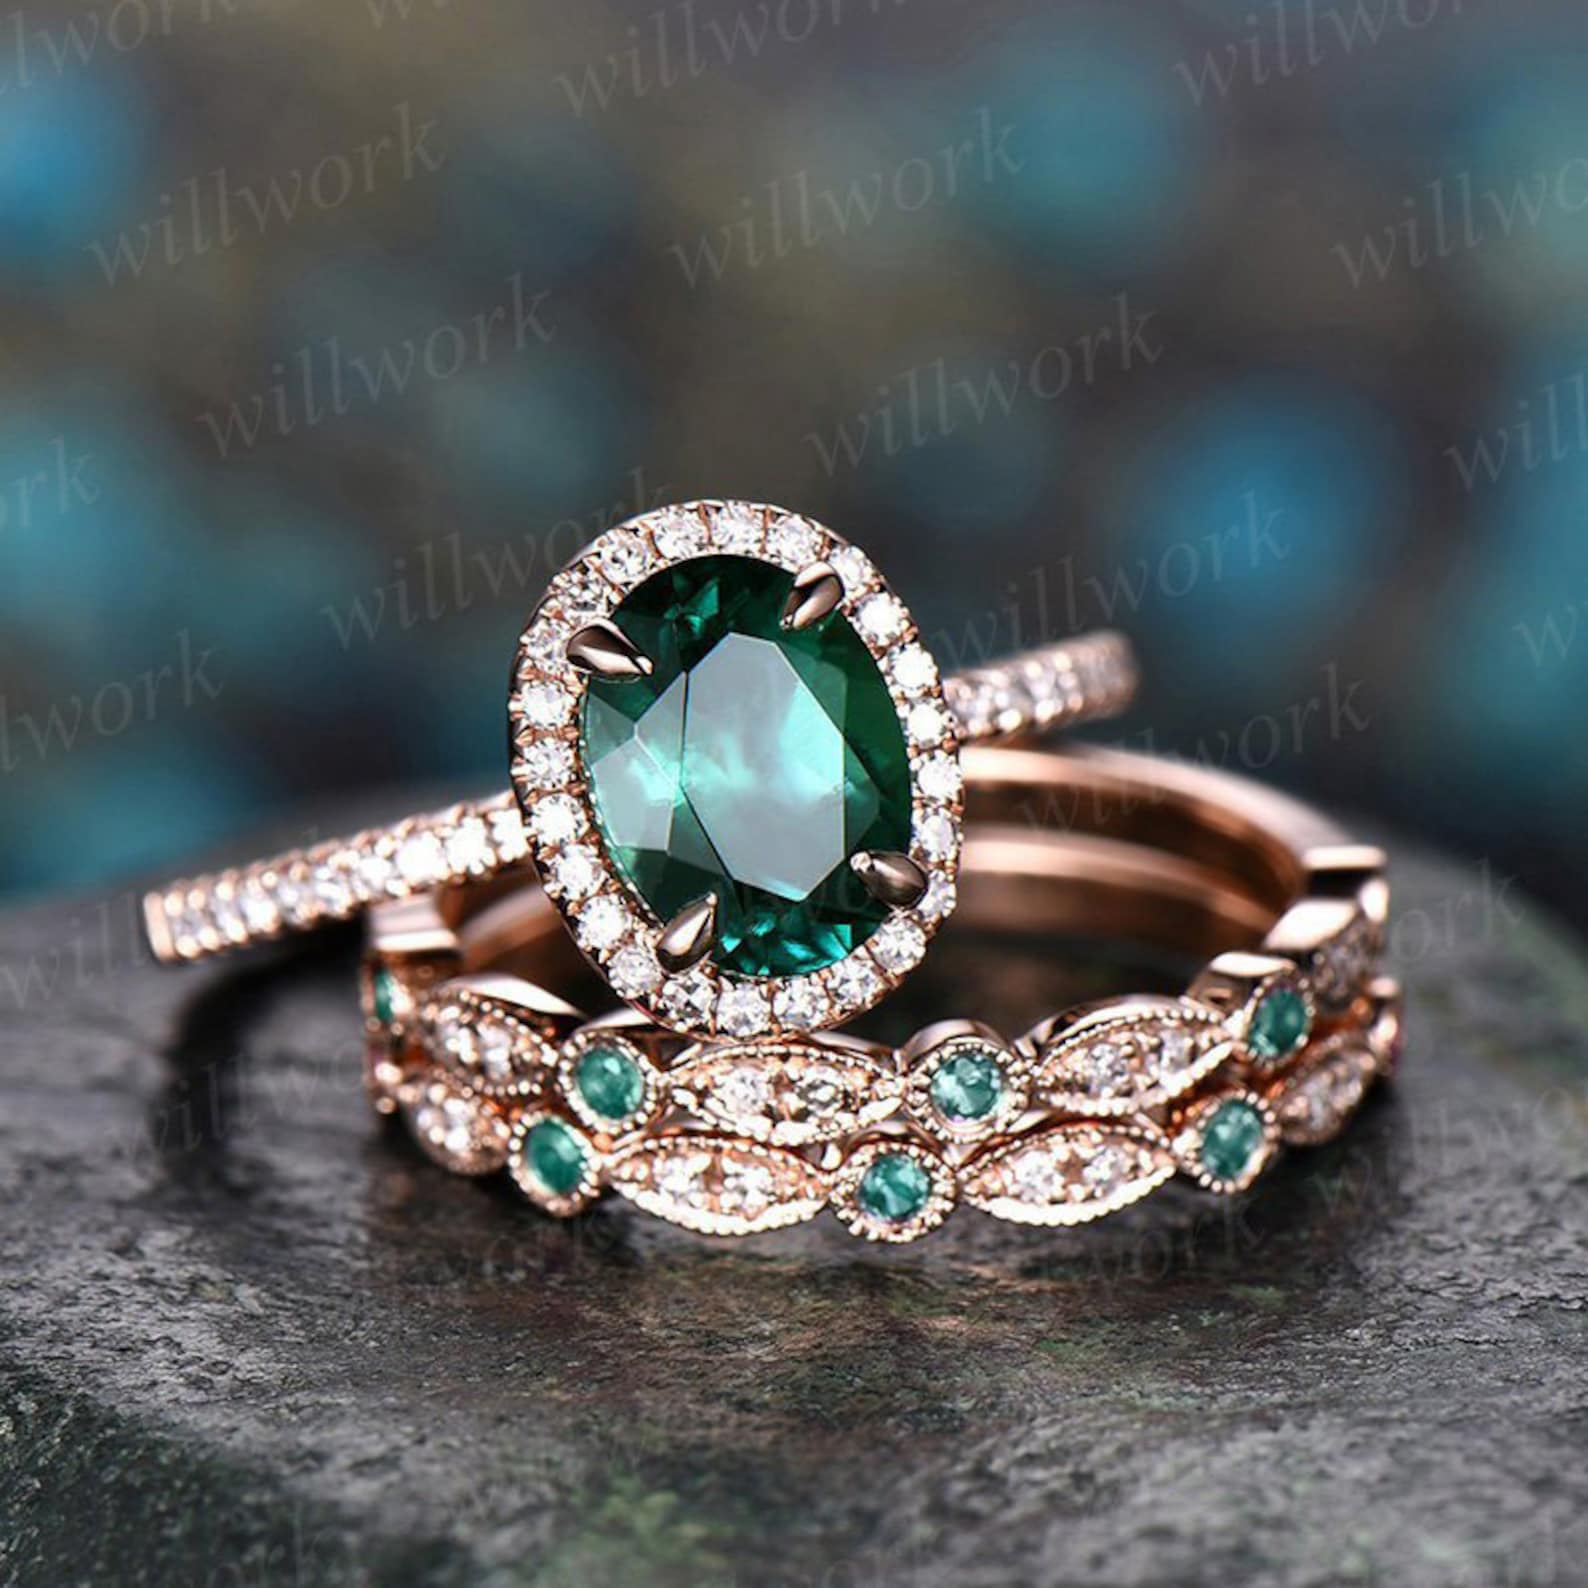 Emerald Ring Vintage Unique Oval Emerald Engagement Ring Set - Etsy